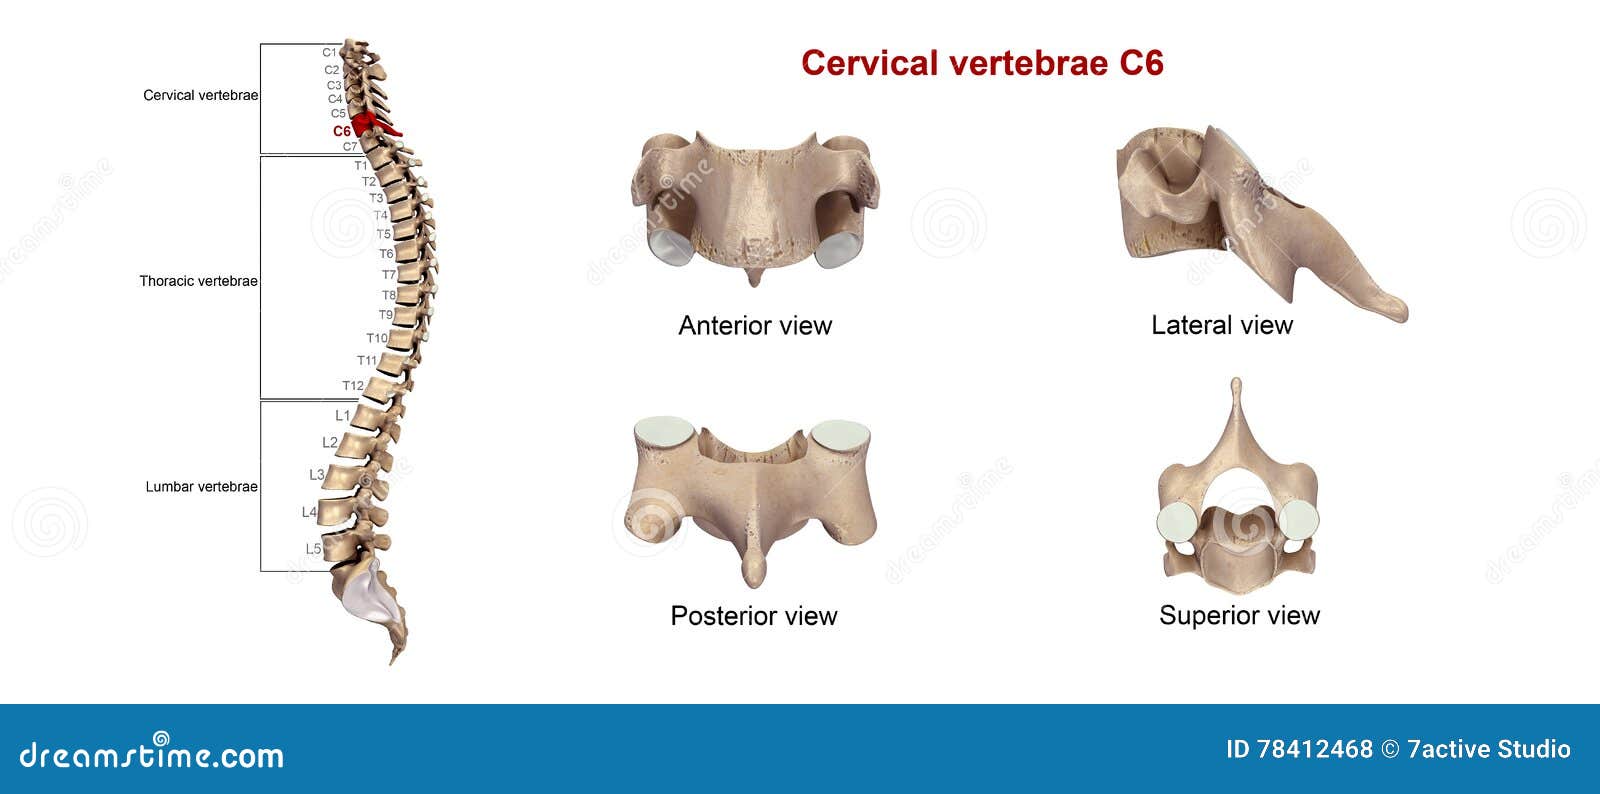 cervical vertebrae c6